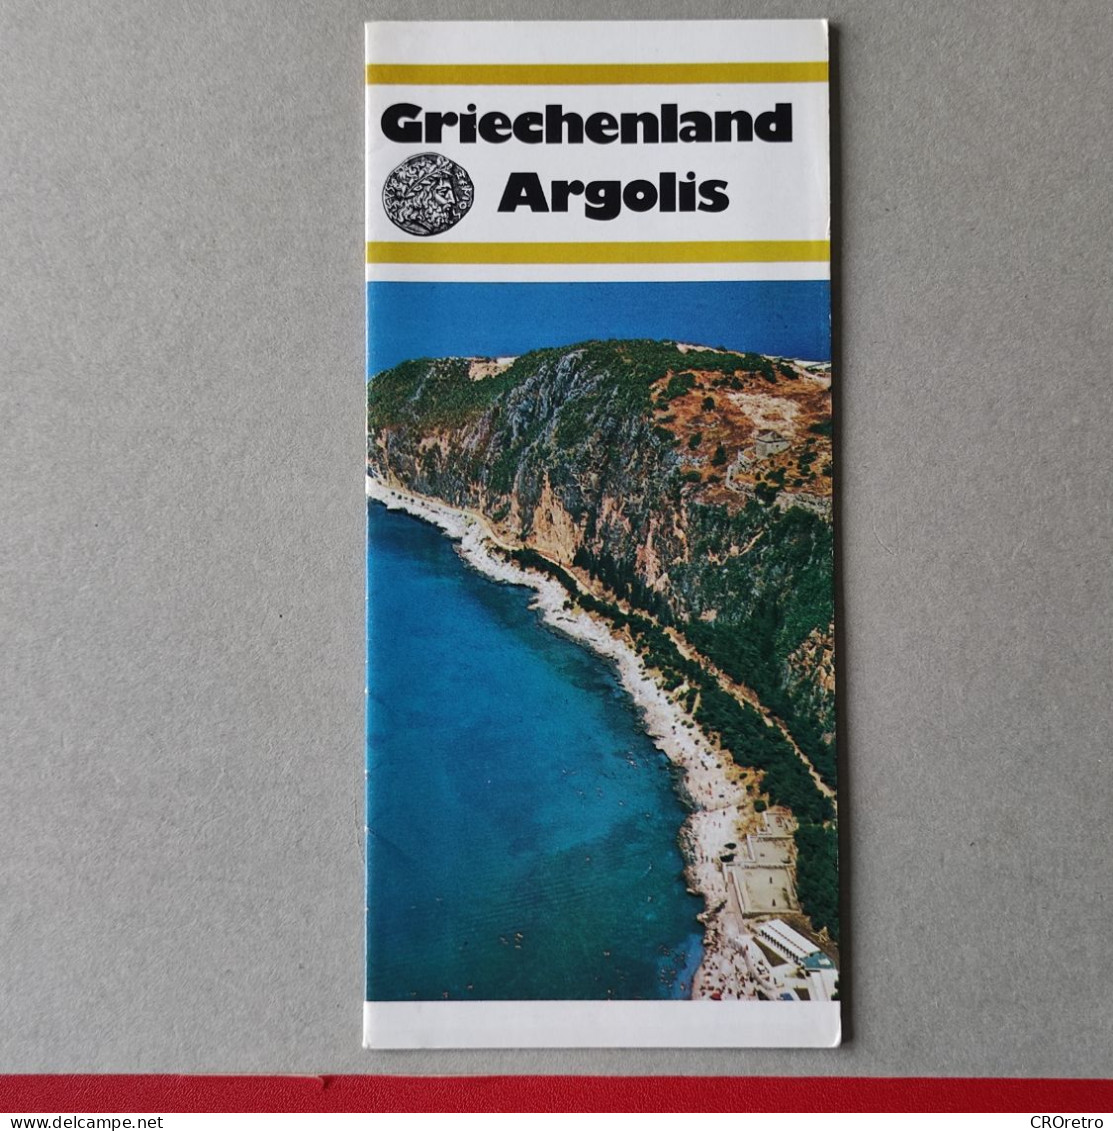 GRIECHENLAND ARGOLIS / GREECE, Vintage Tourism Brochure, Prospect, Guide (pro3) - Reiseprospekte